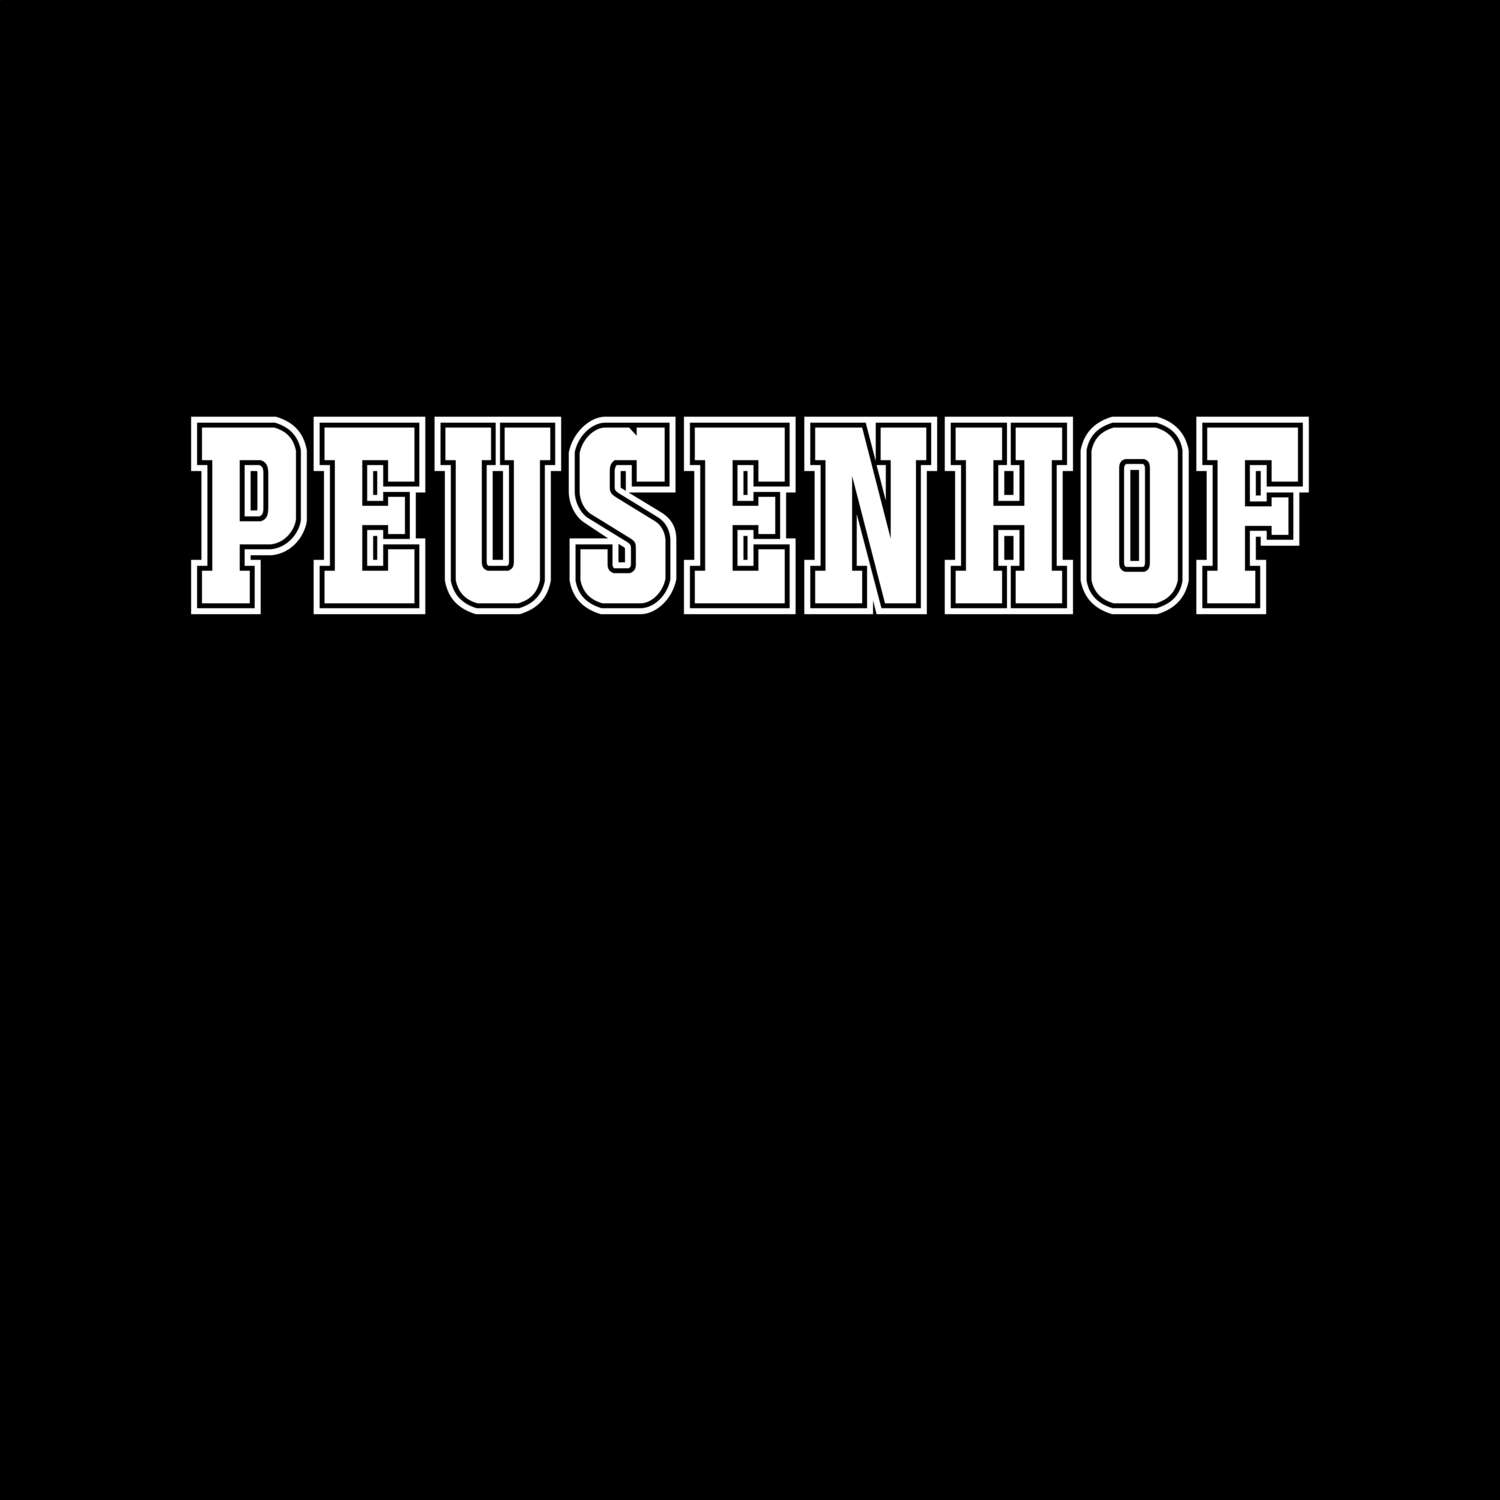 Peusenhof T-Shirt »Classic«